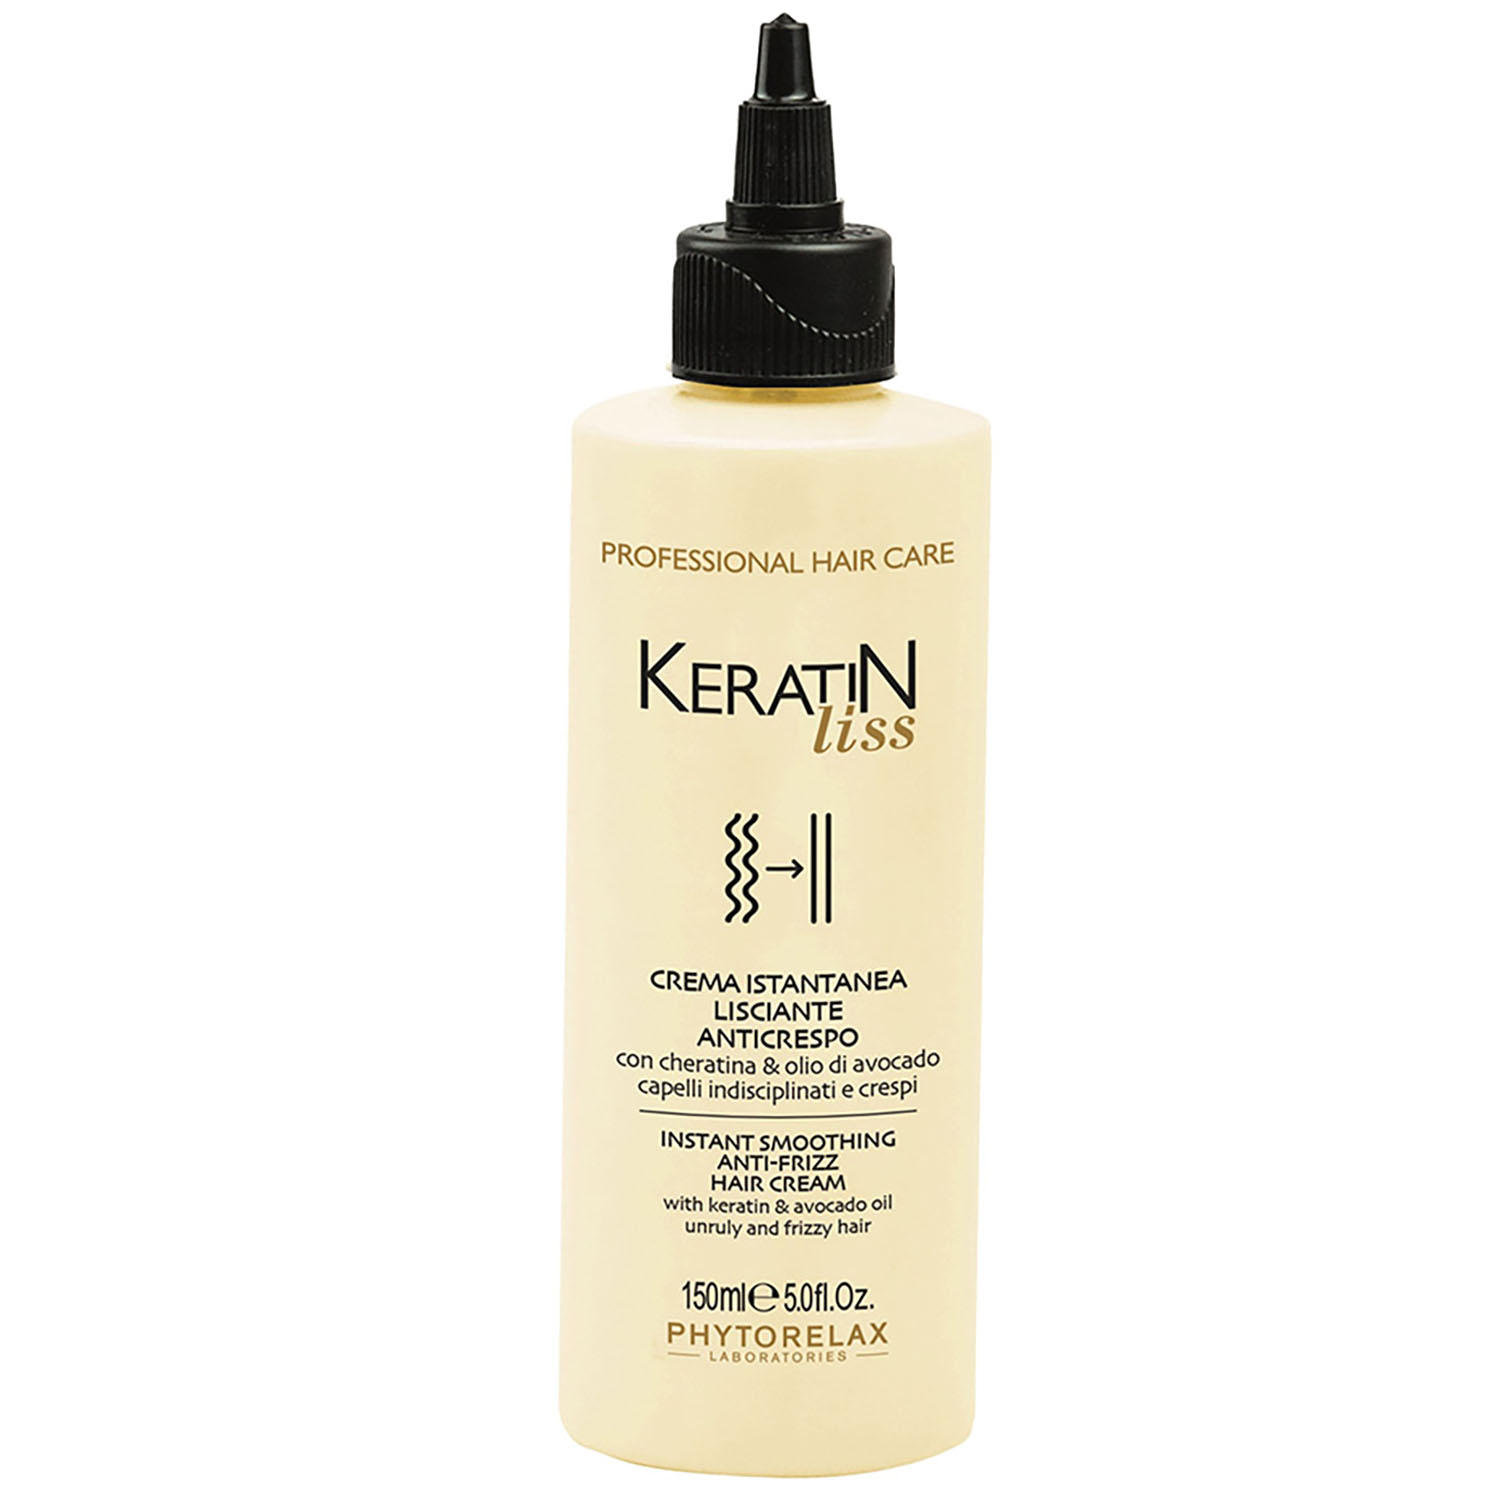 Крем Phytorelax Laboratories Keratin Liss Instant Smoothing Anti-Frizz Hair Cream для разглаживания волос 150 мл - фото 1